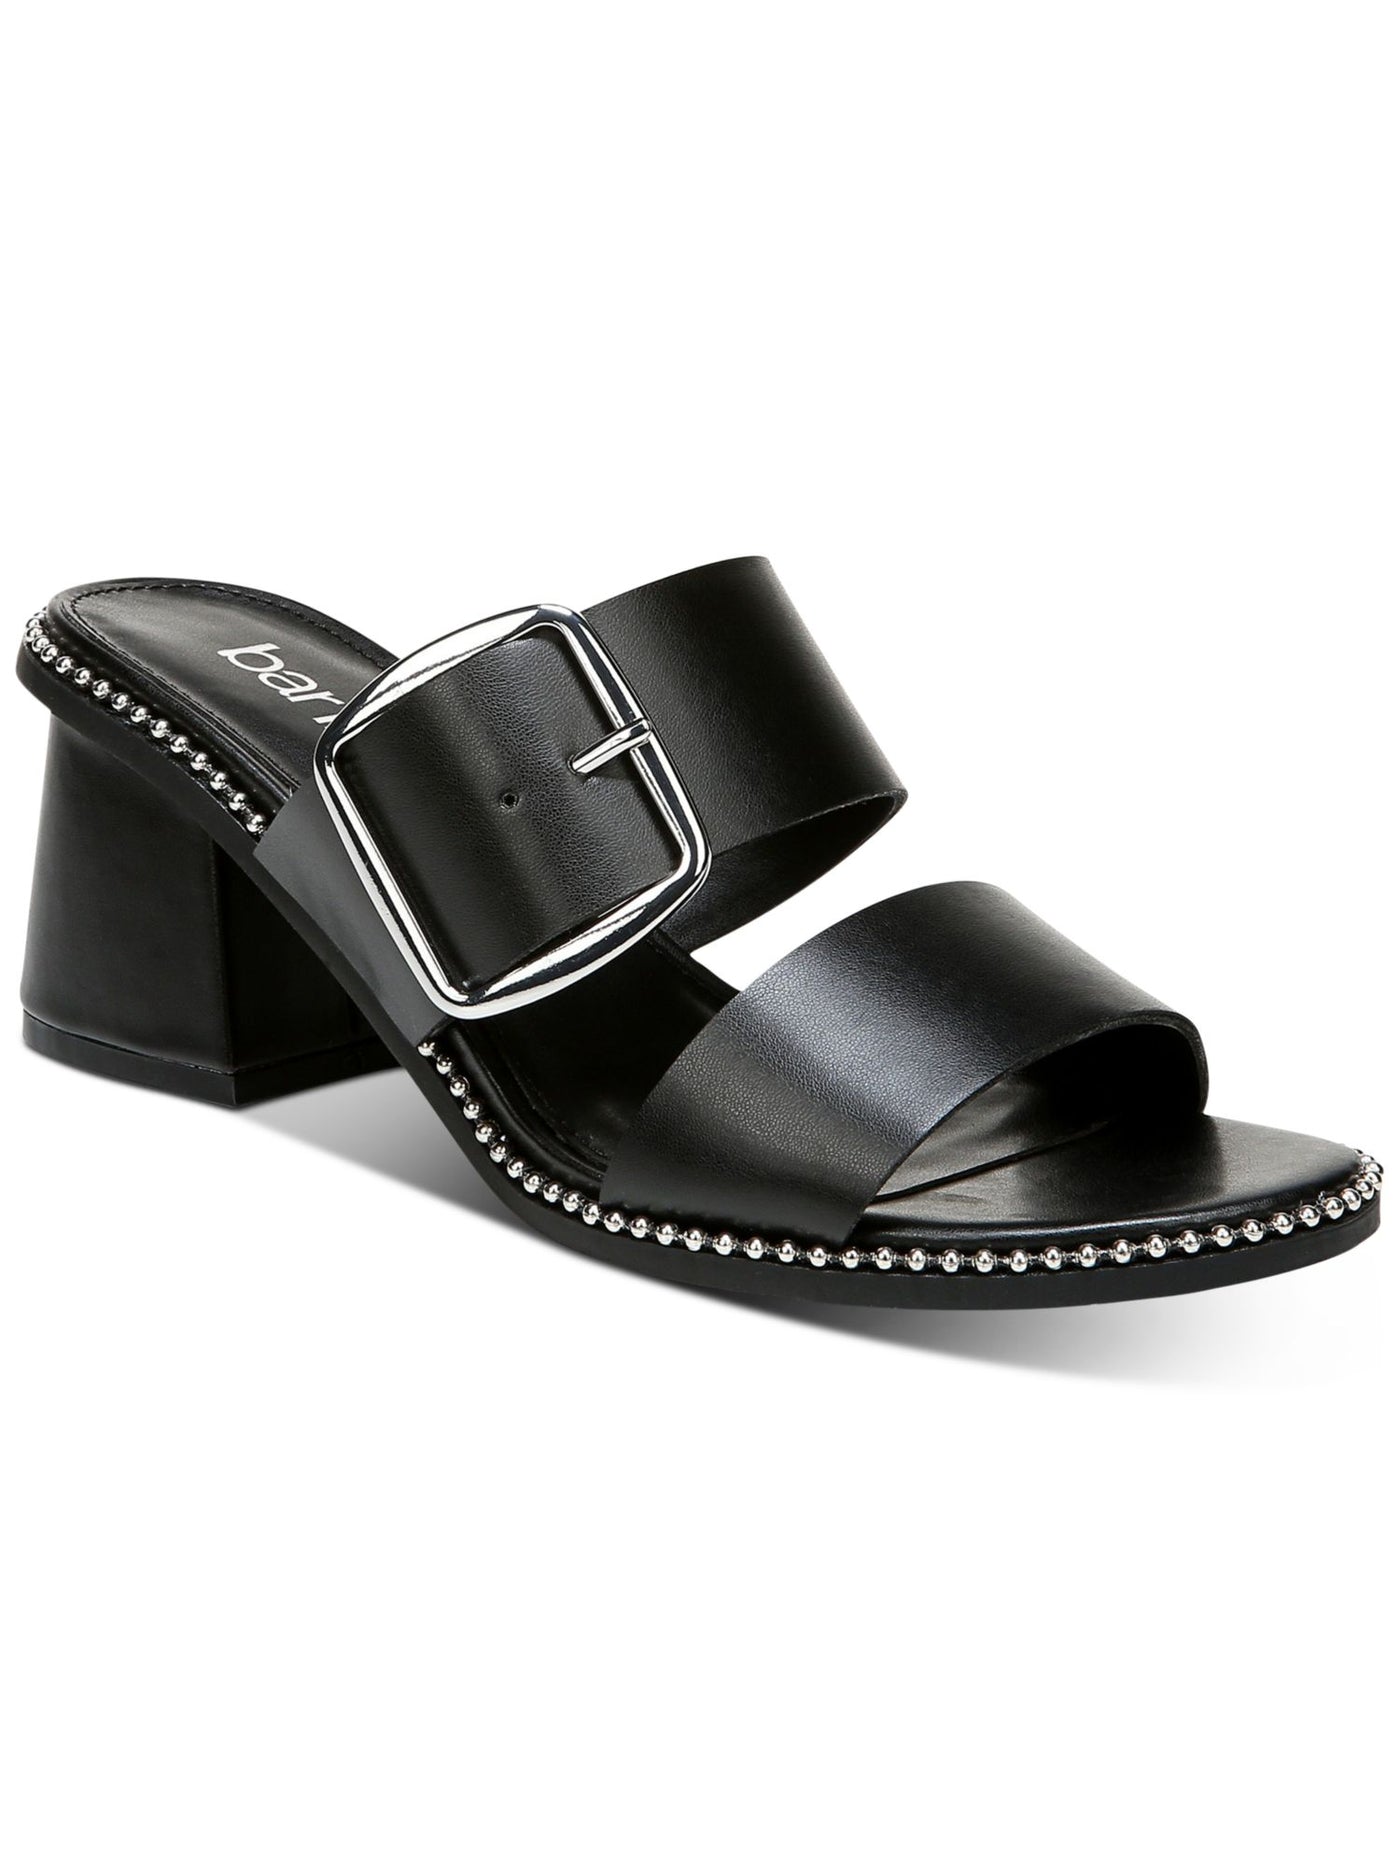 BAR III Womens Black Ball Chain Trim Padded Reena Almond Toe Block Heel Buckle Sandals Shoes 6.5 M